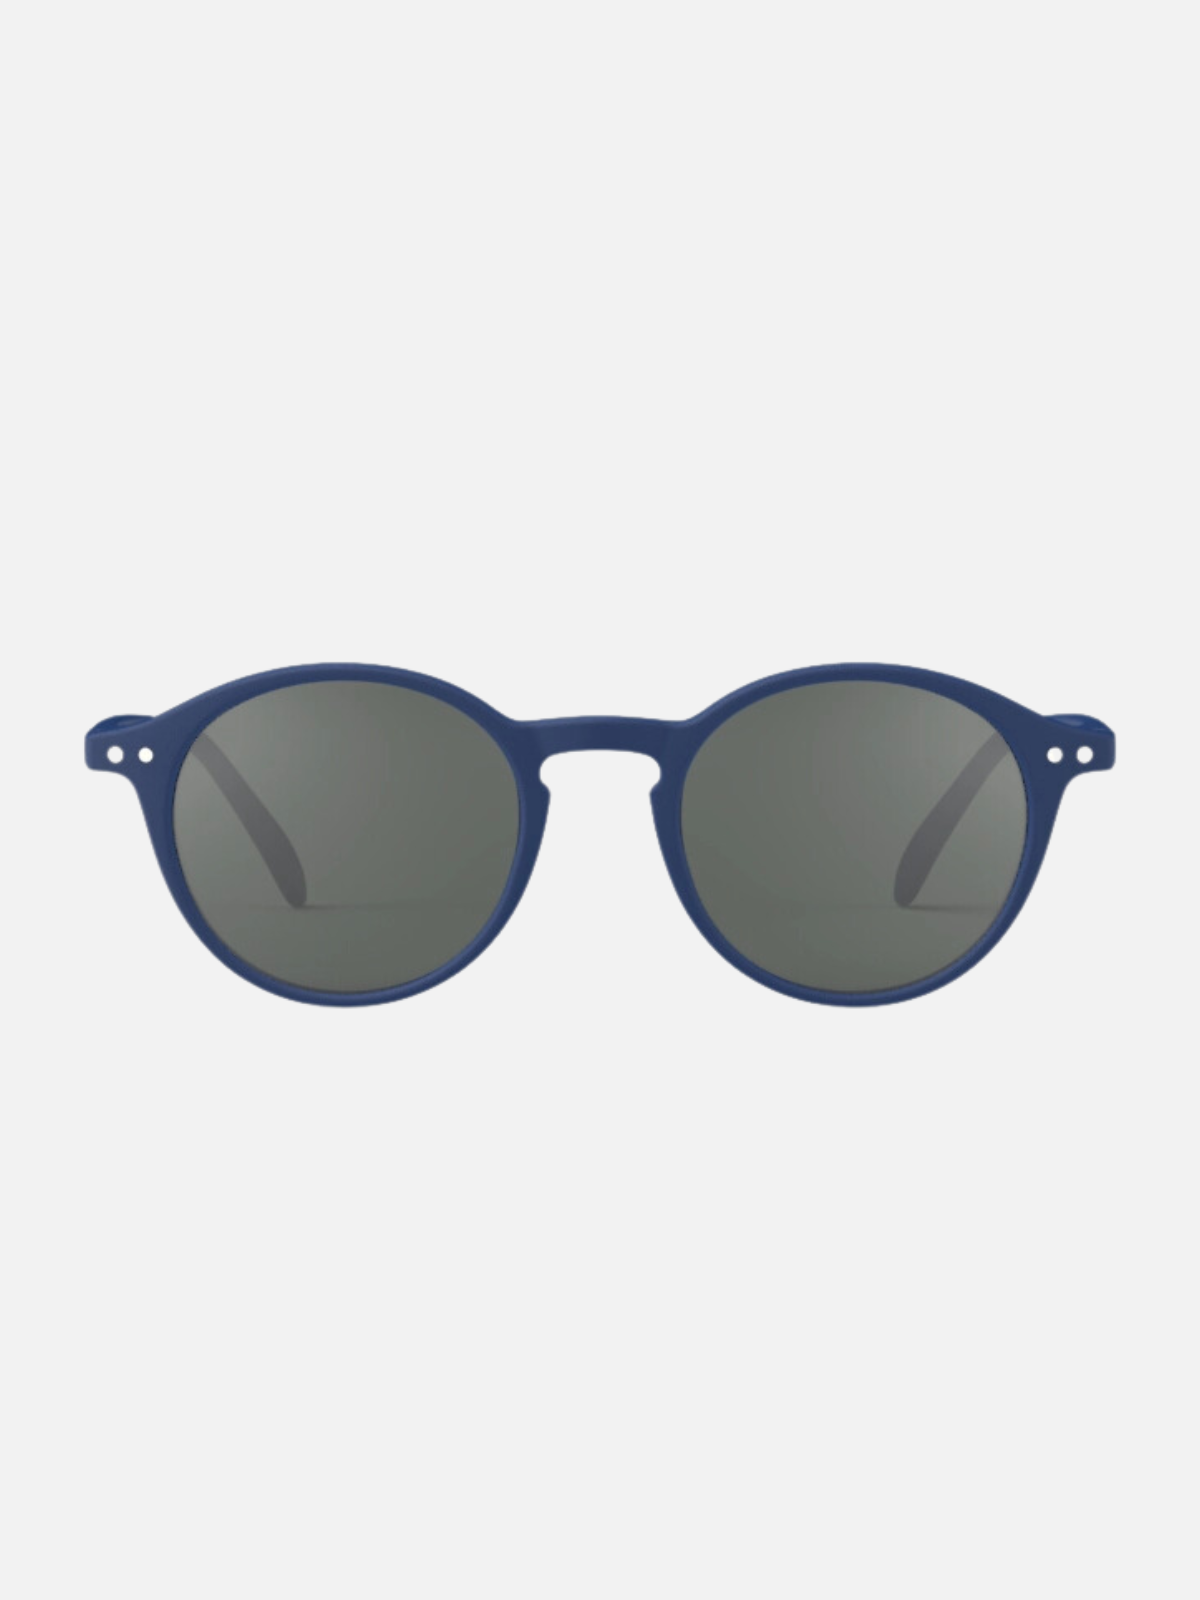 izipizi iconic #D sunglasses lightweight flex hinges kempt athens ga georgia men's clothing store